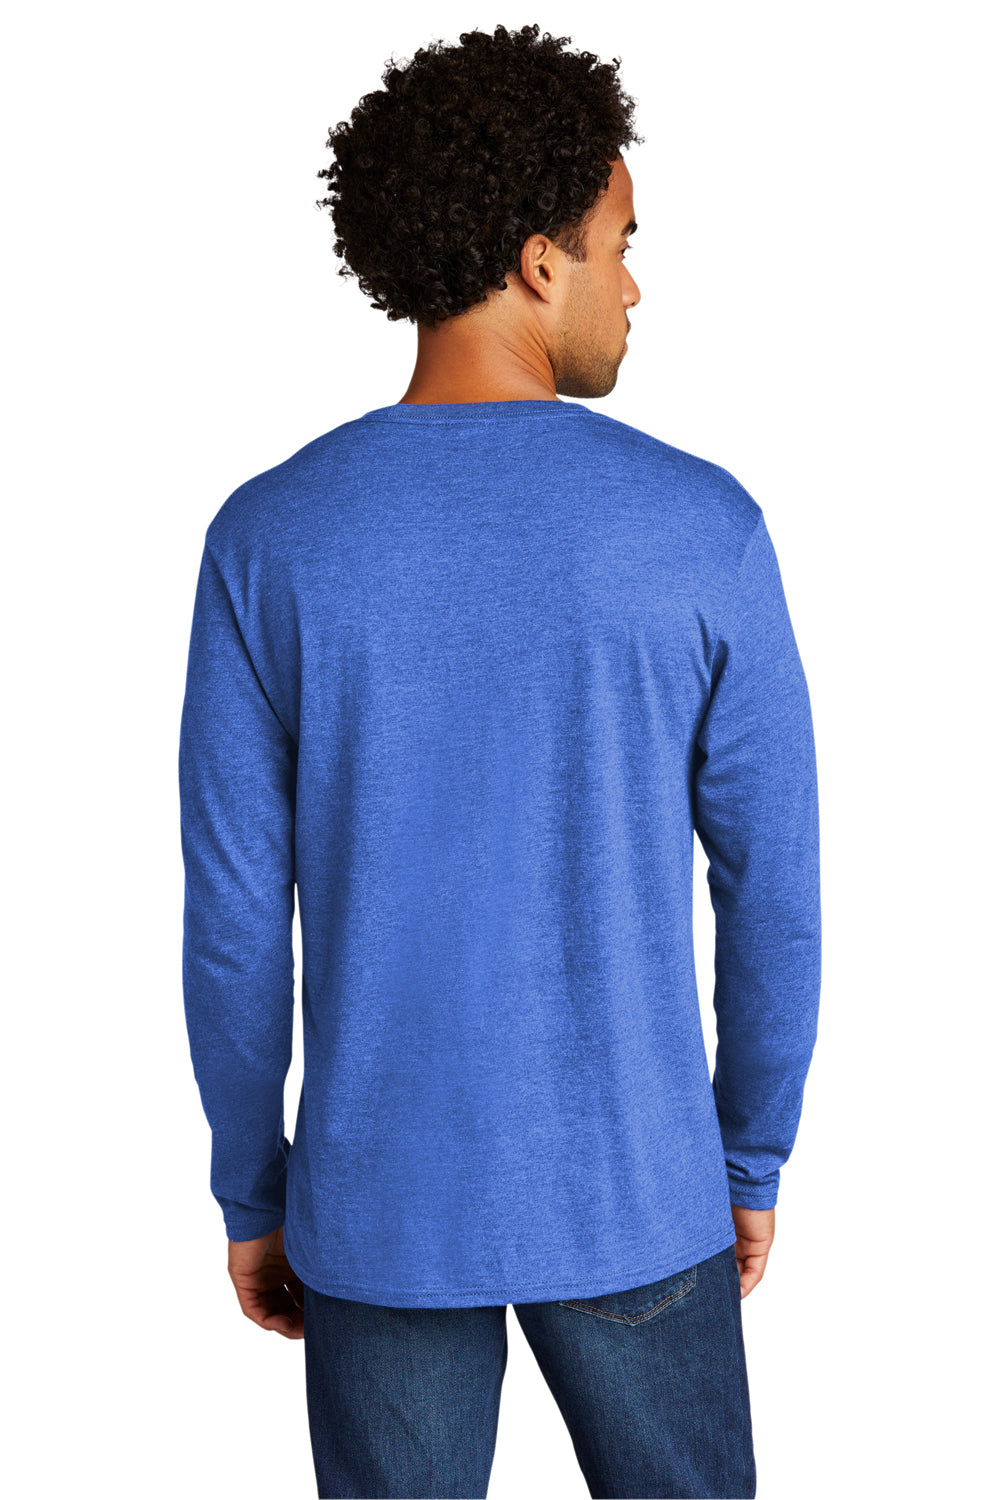 Port & Company Mens Long Sleeve Crewneck T-Shirt Heather Royal Blue Side